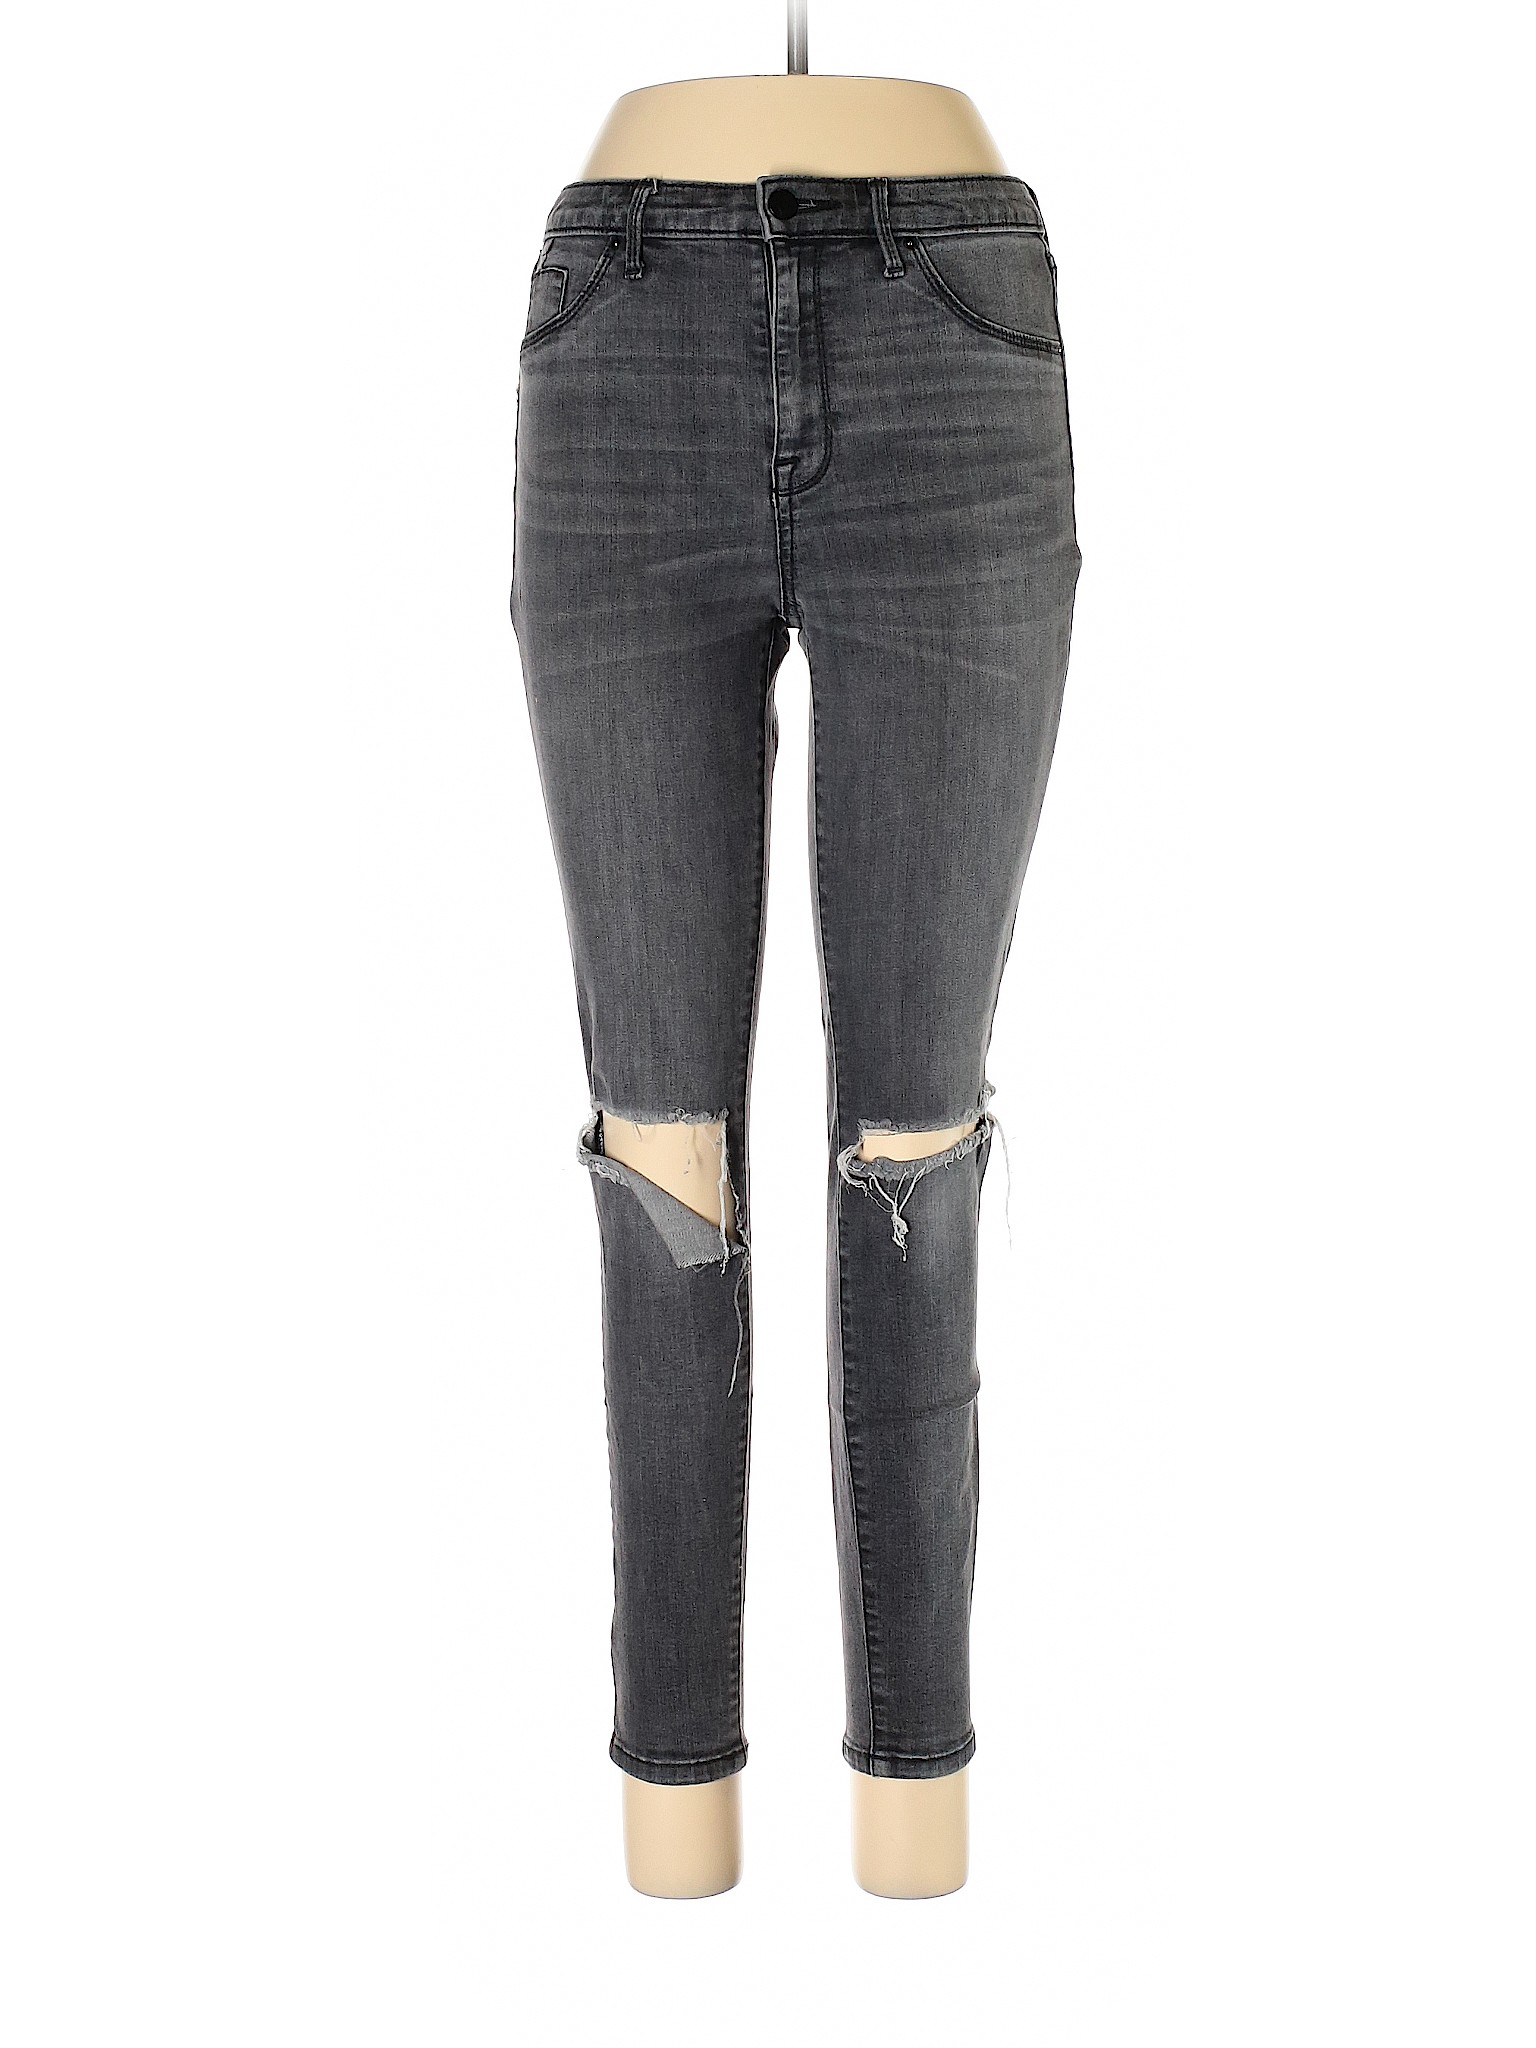 Mossimo Women Gray Jeans 8 | eBay